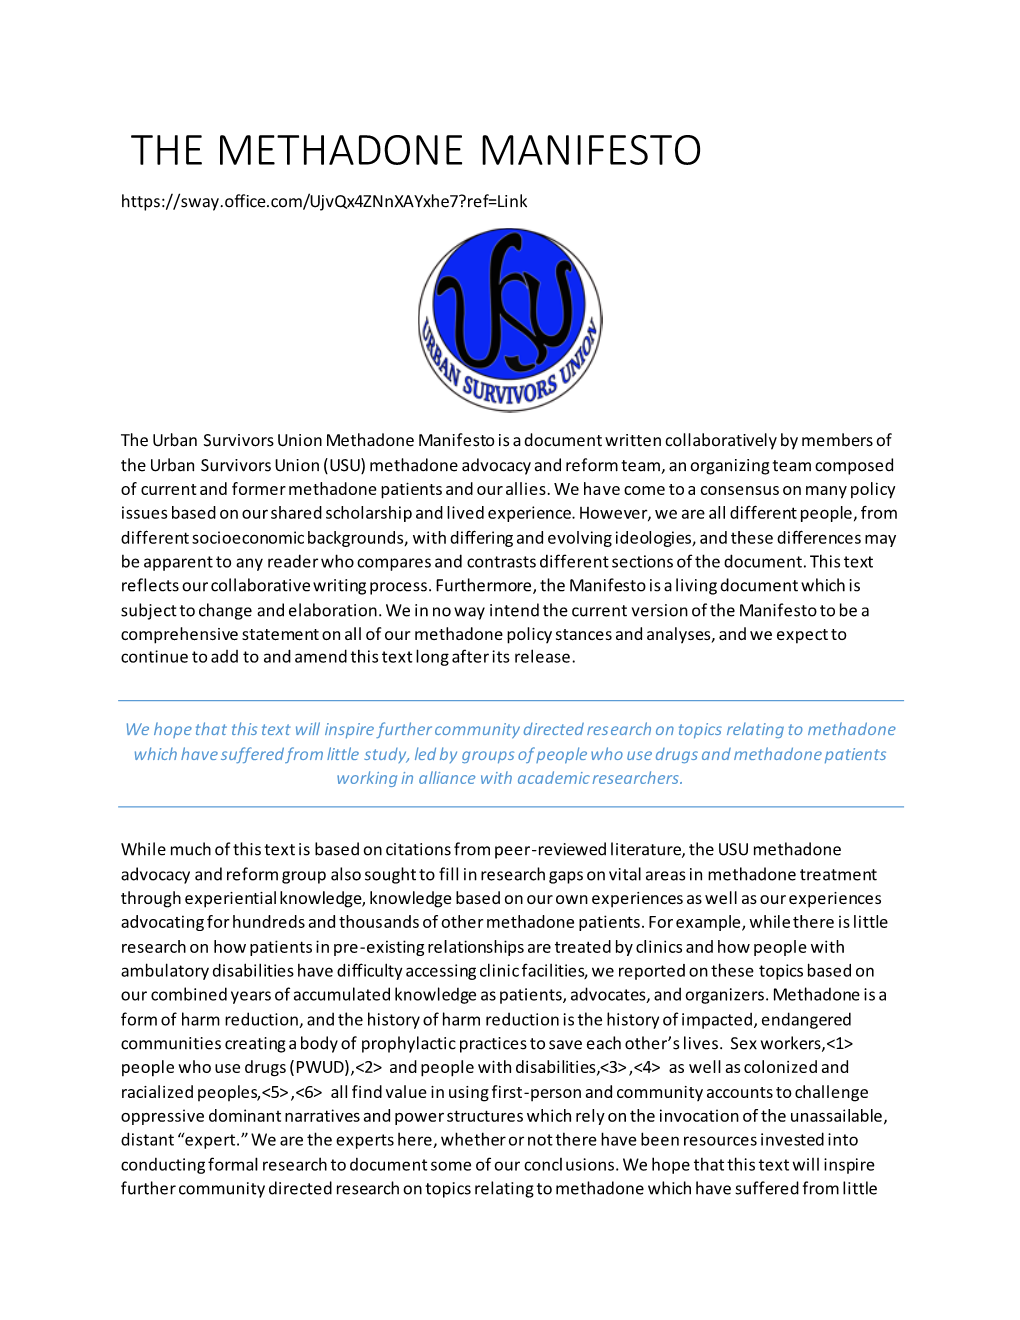 The Methadone Manifesto